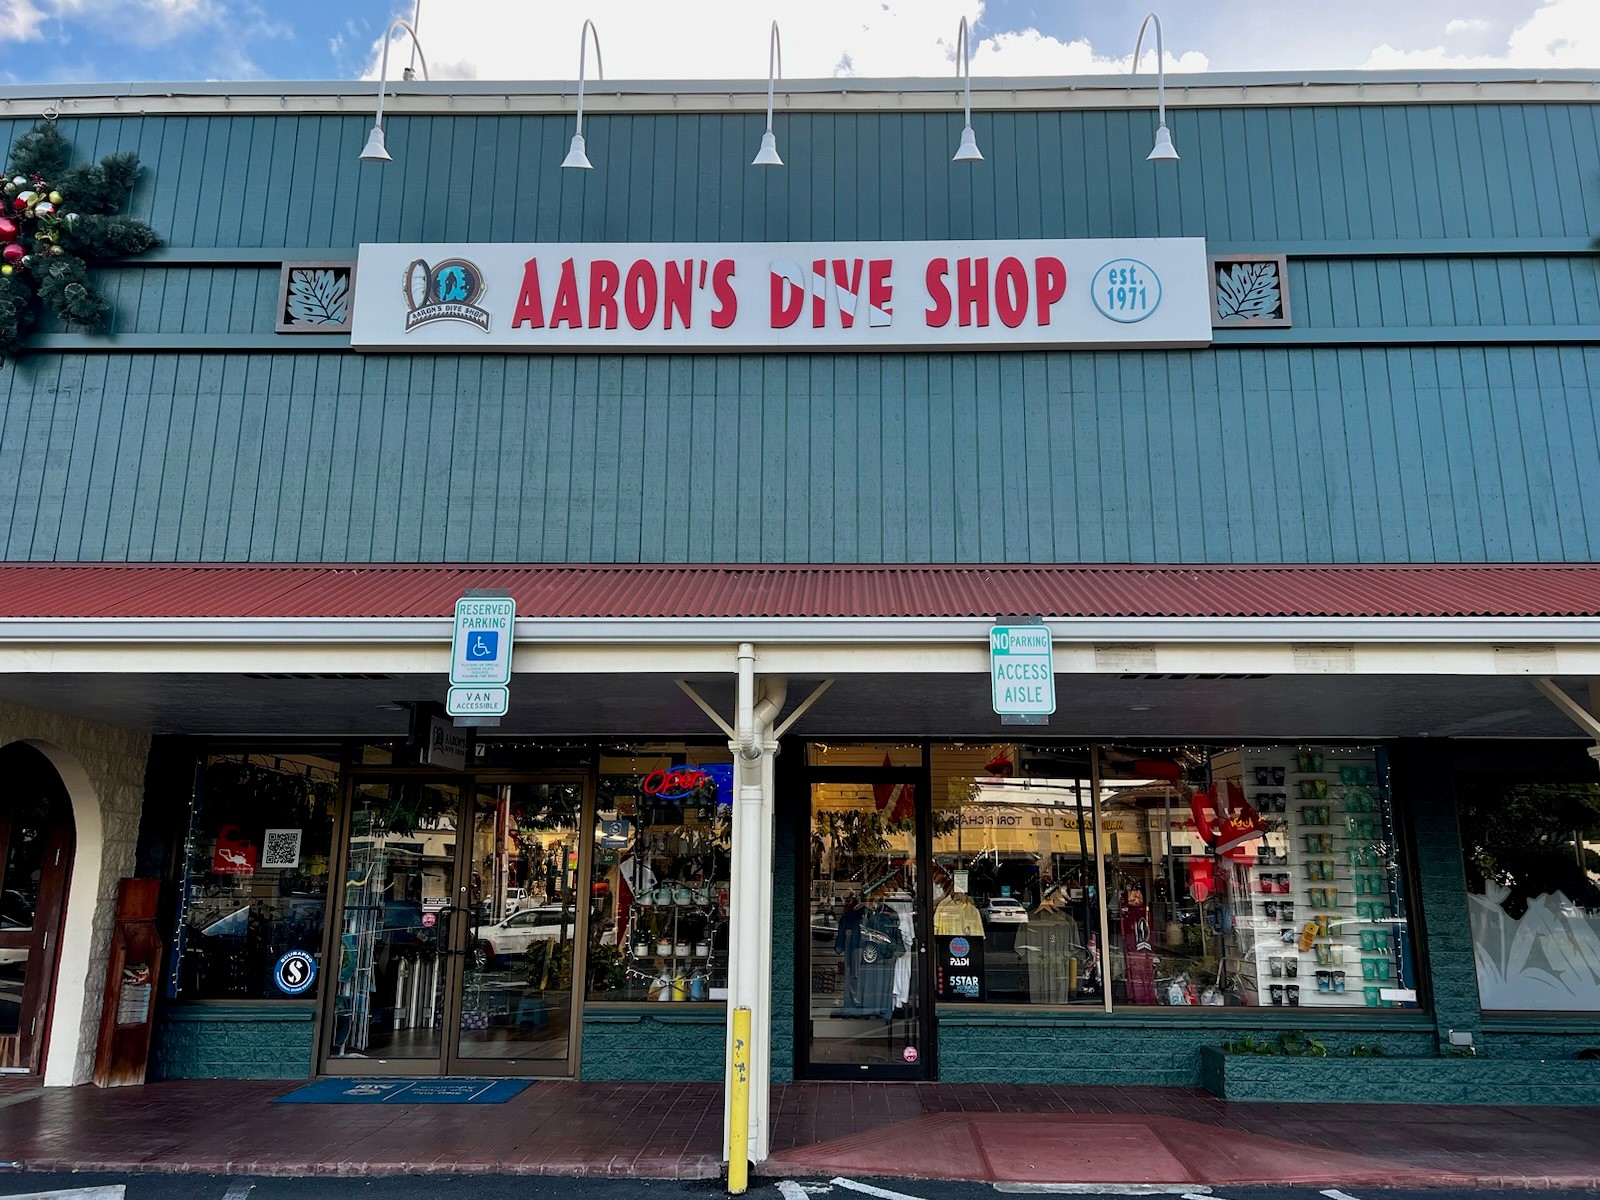 Aarons Dive shop storefront